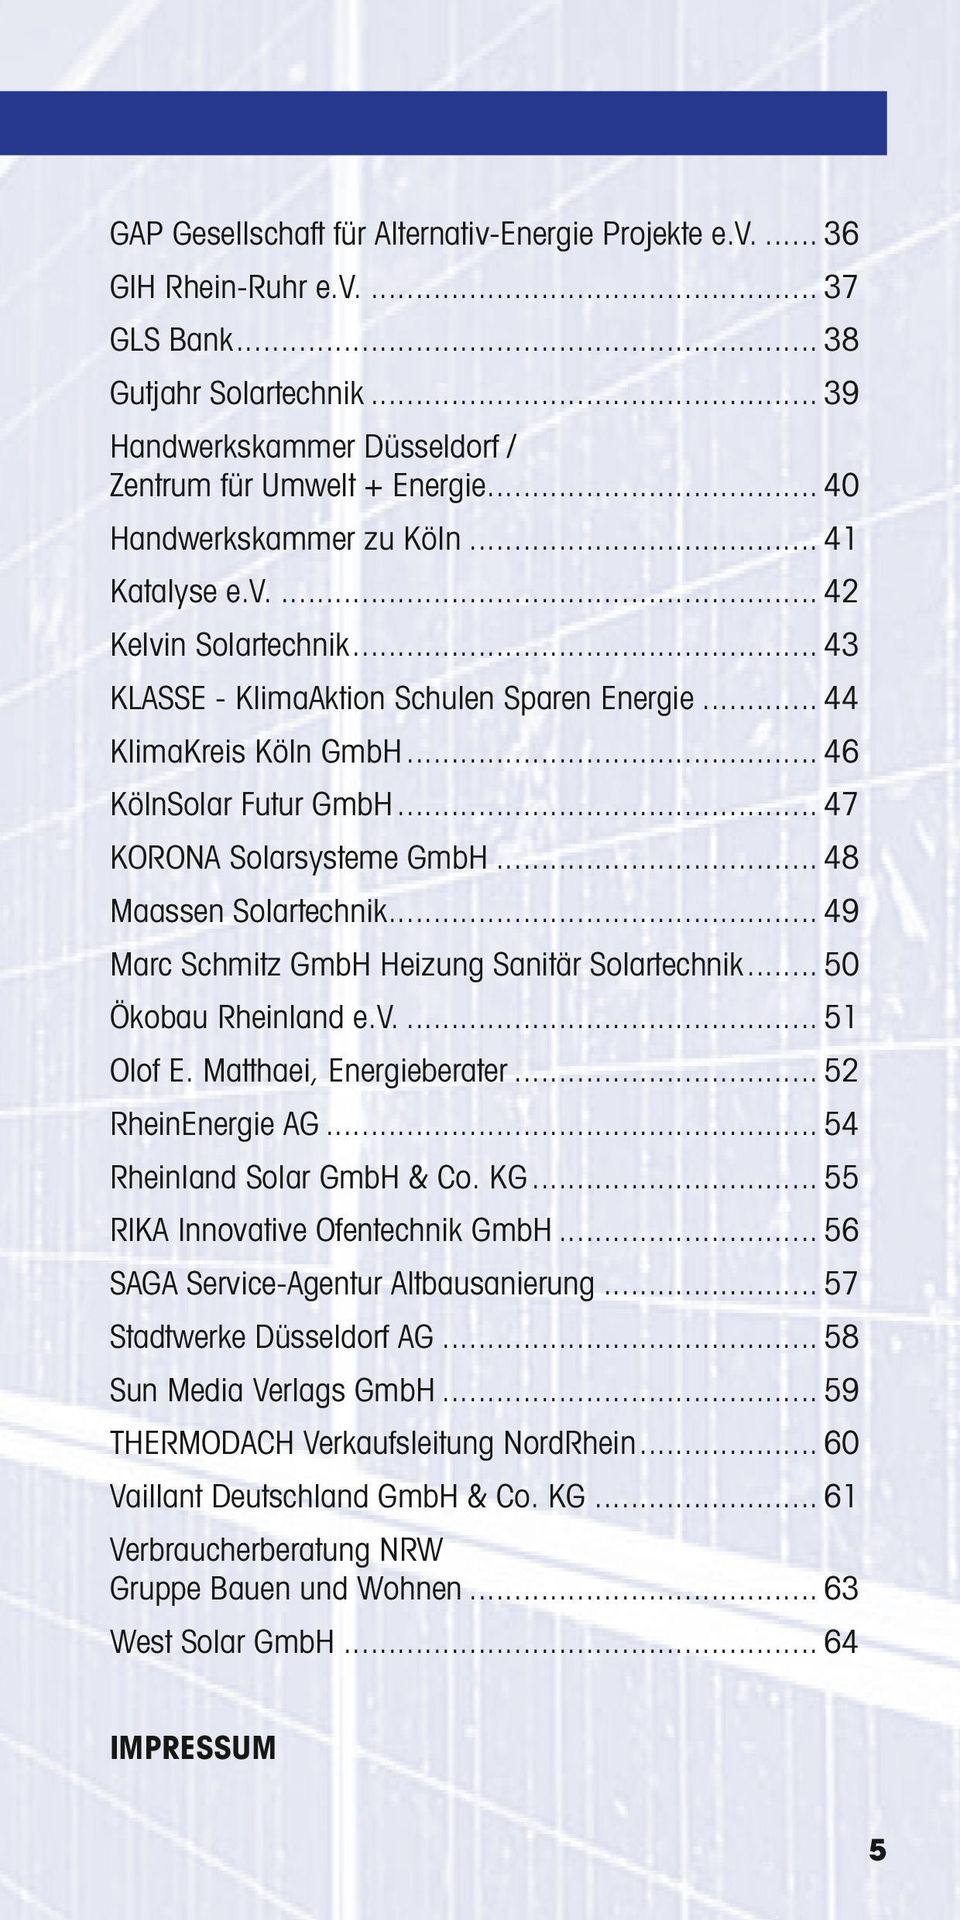 .. 47 KORONA Solarsysteme GmbH... 48 Maassen Solartechnik... 49 Marc Schmitz GmbH Heizung Sanitär Solartechnik... 50 Ökobau Rheinland e.v... 51 Olof E. Matthaei, Energieberater... 52 RheinEnergie AG.